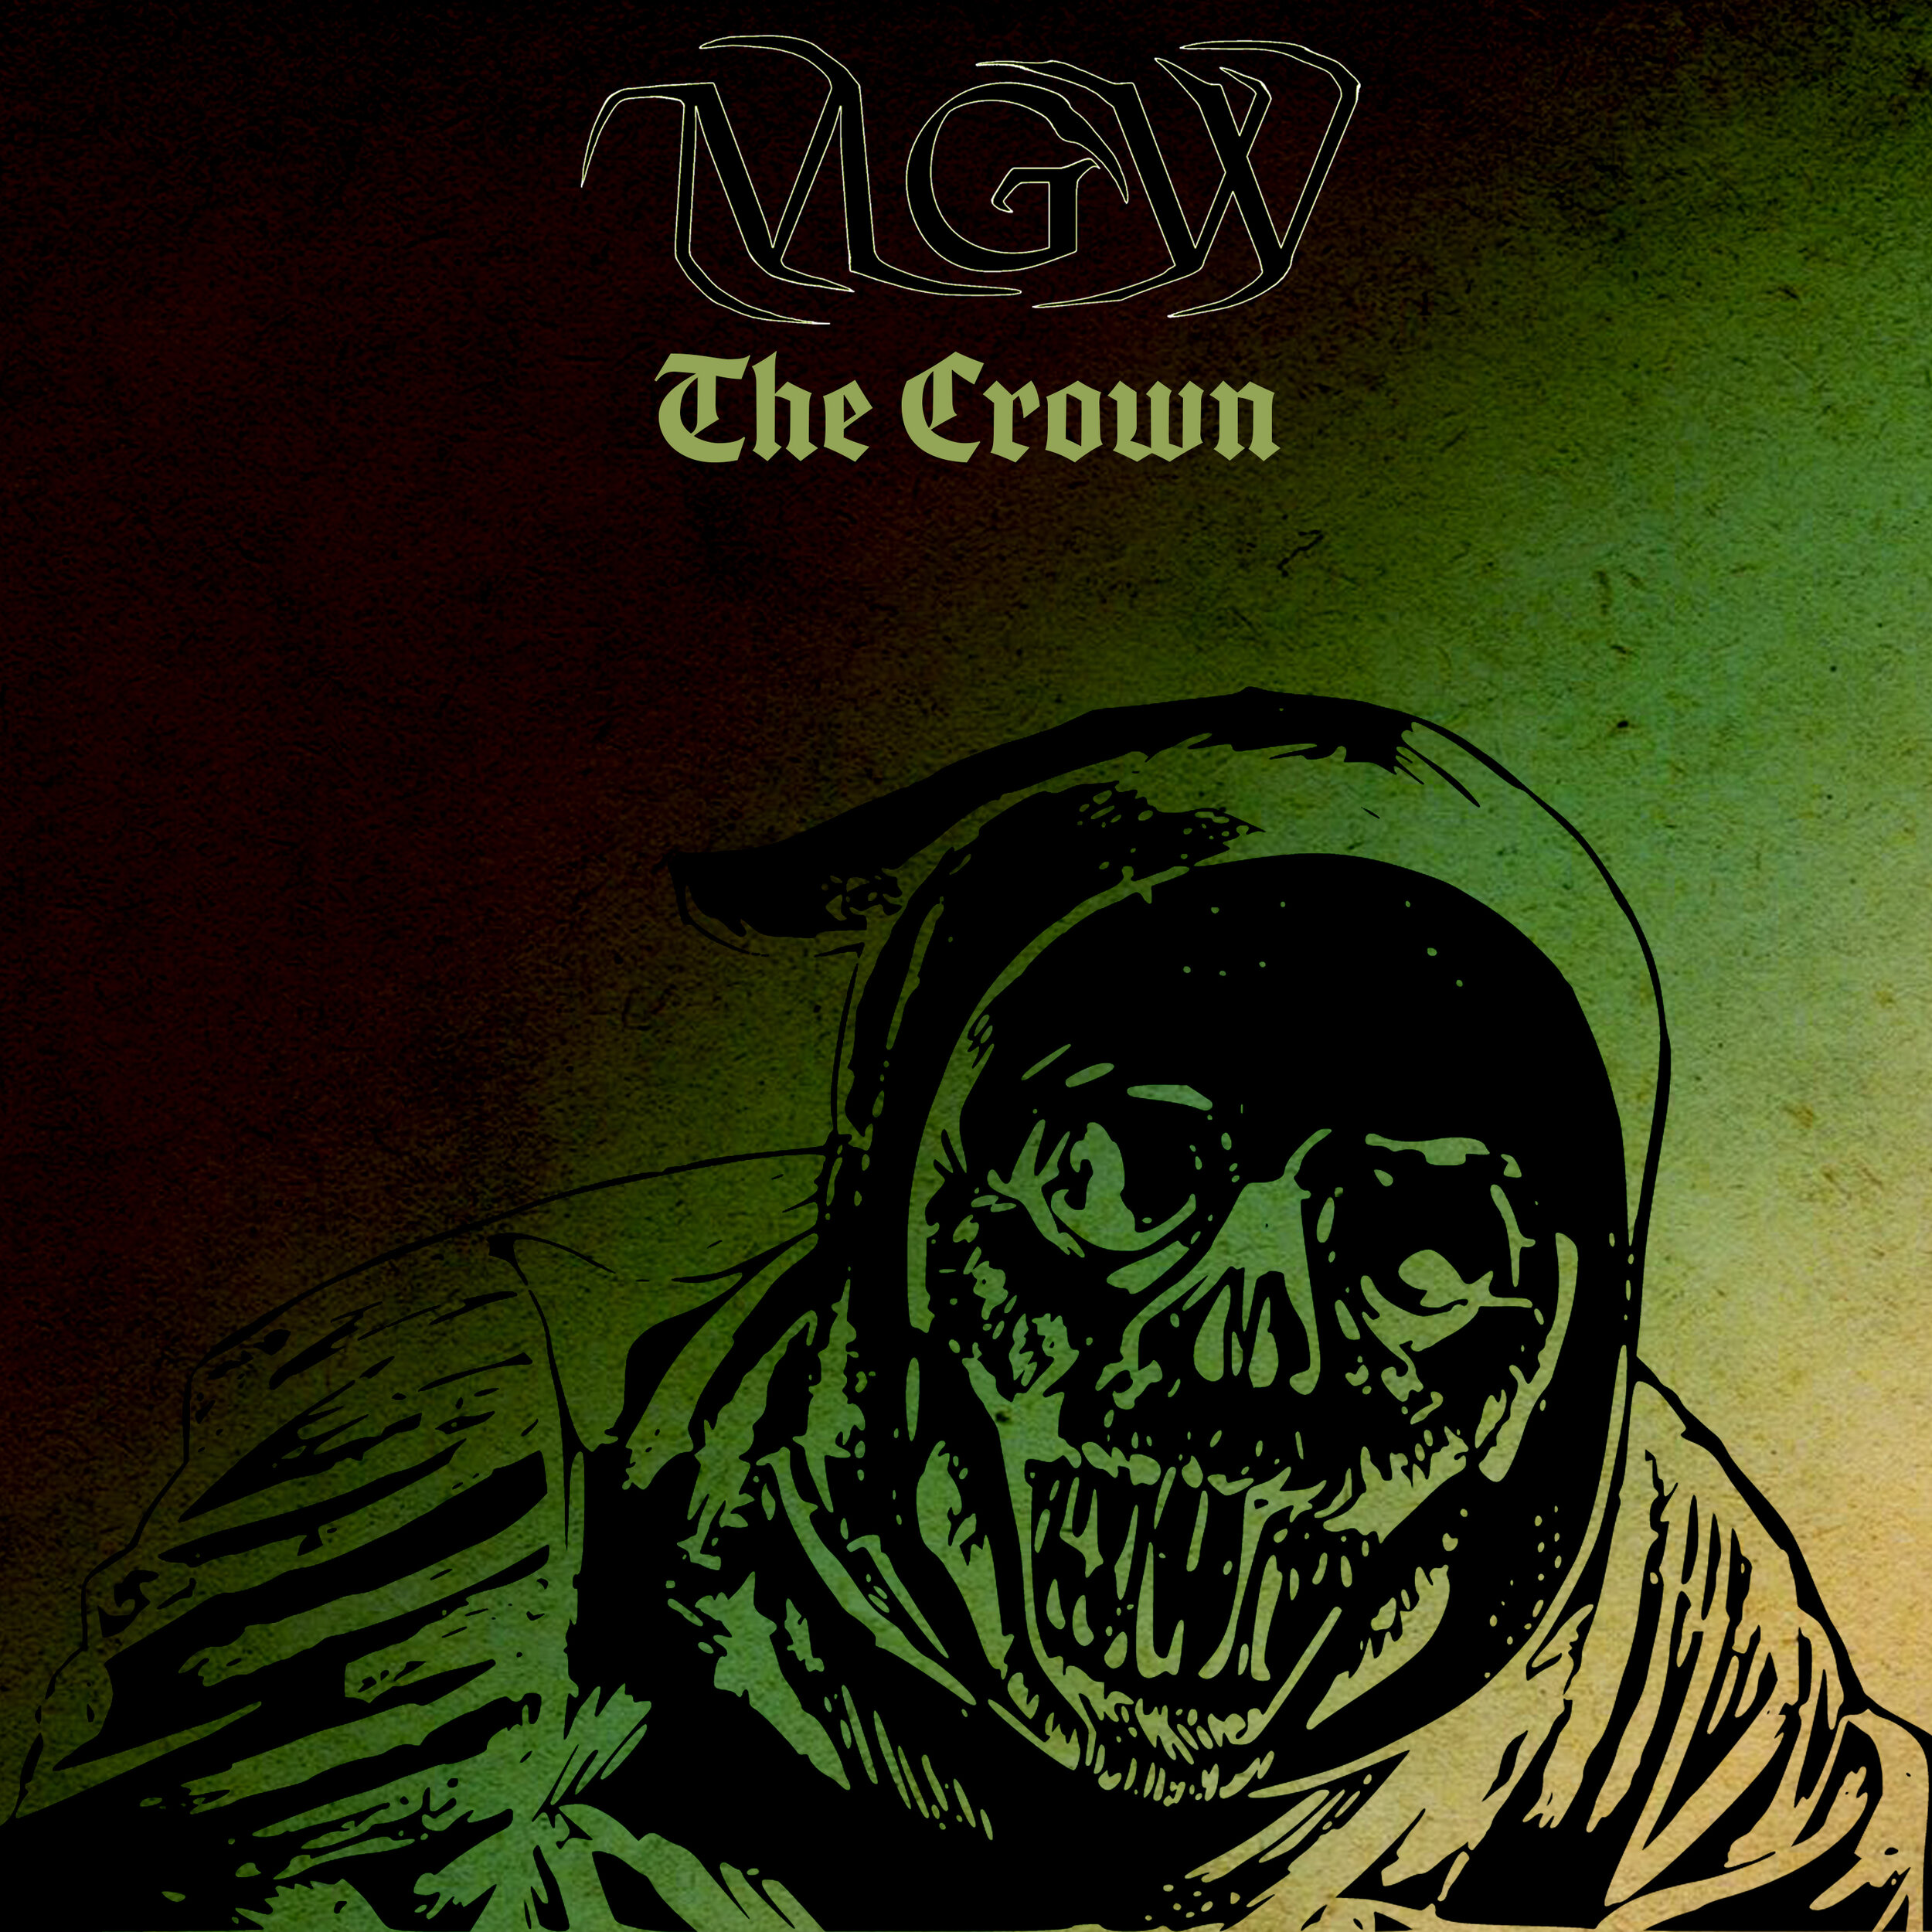 Michael G. Woodley-The Crown EP.jpg